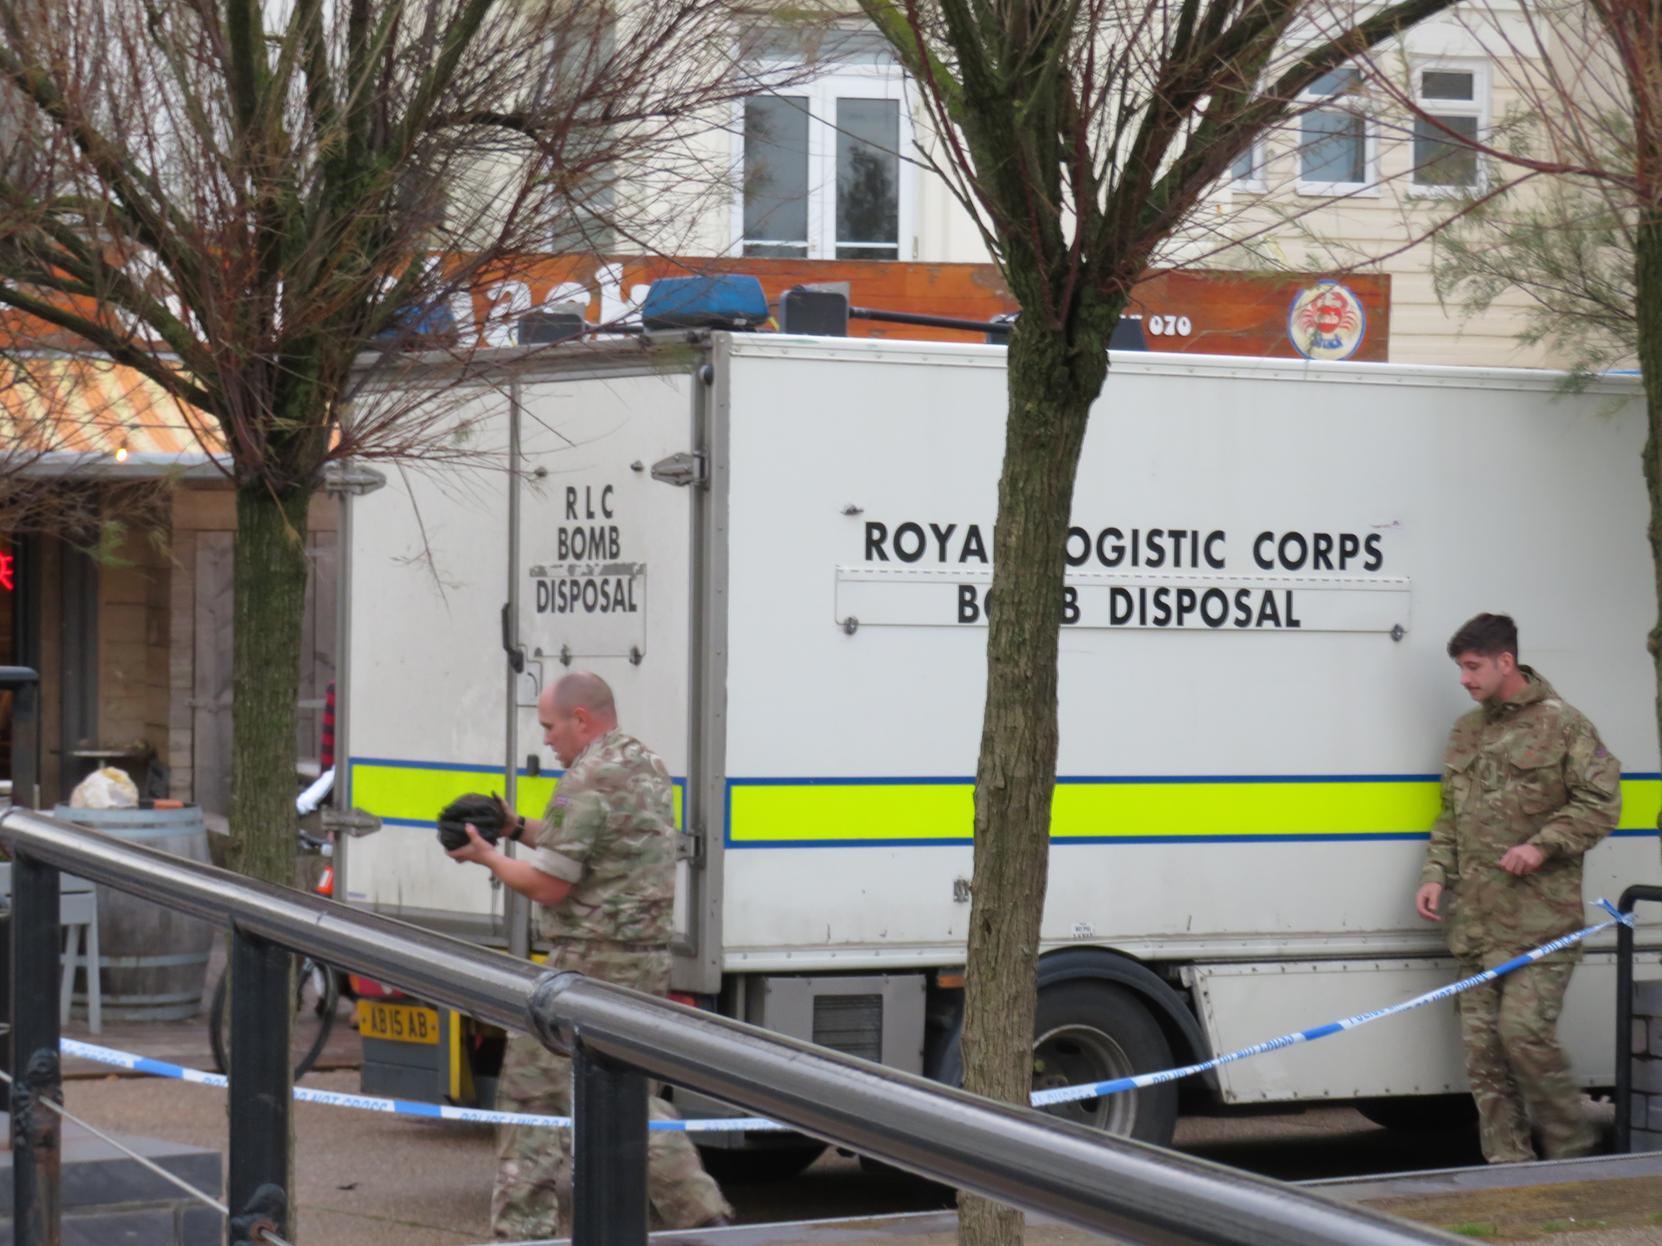 Explosives Ordnance Disposal (EOD) vehicle pictured by Worthing resident Nikki Sheeran